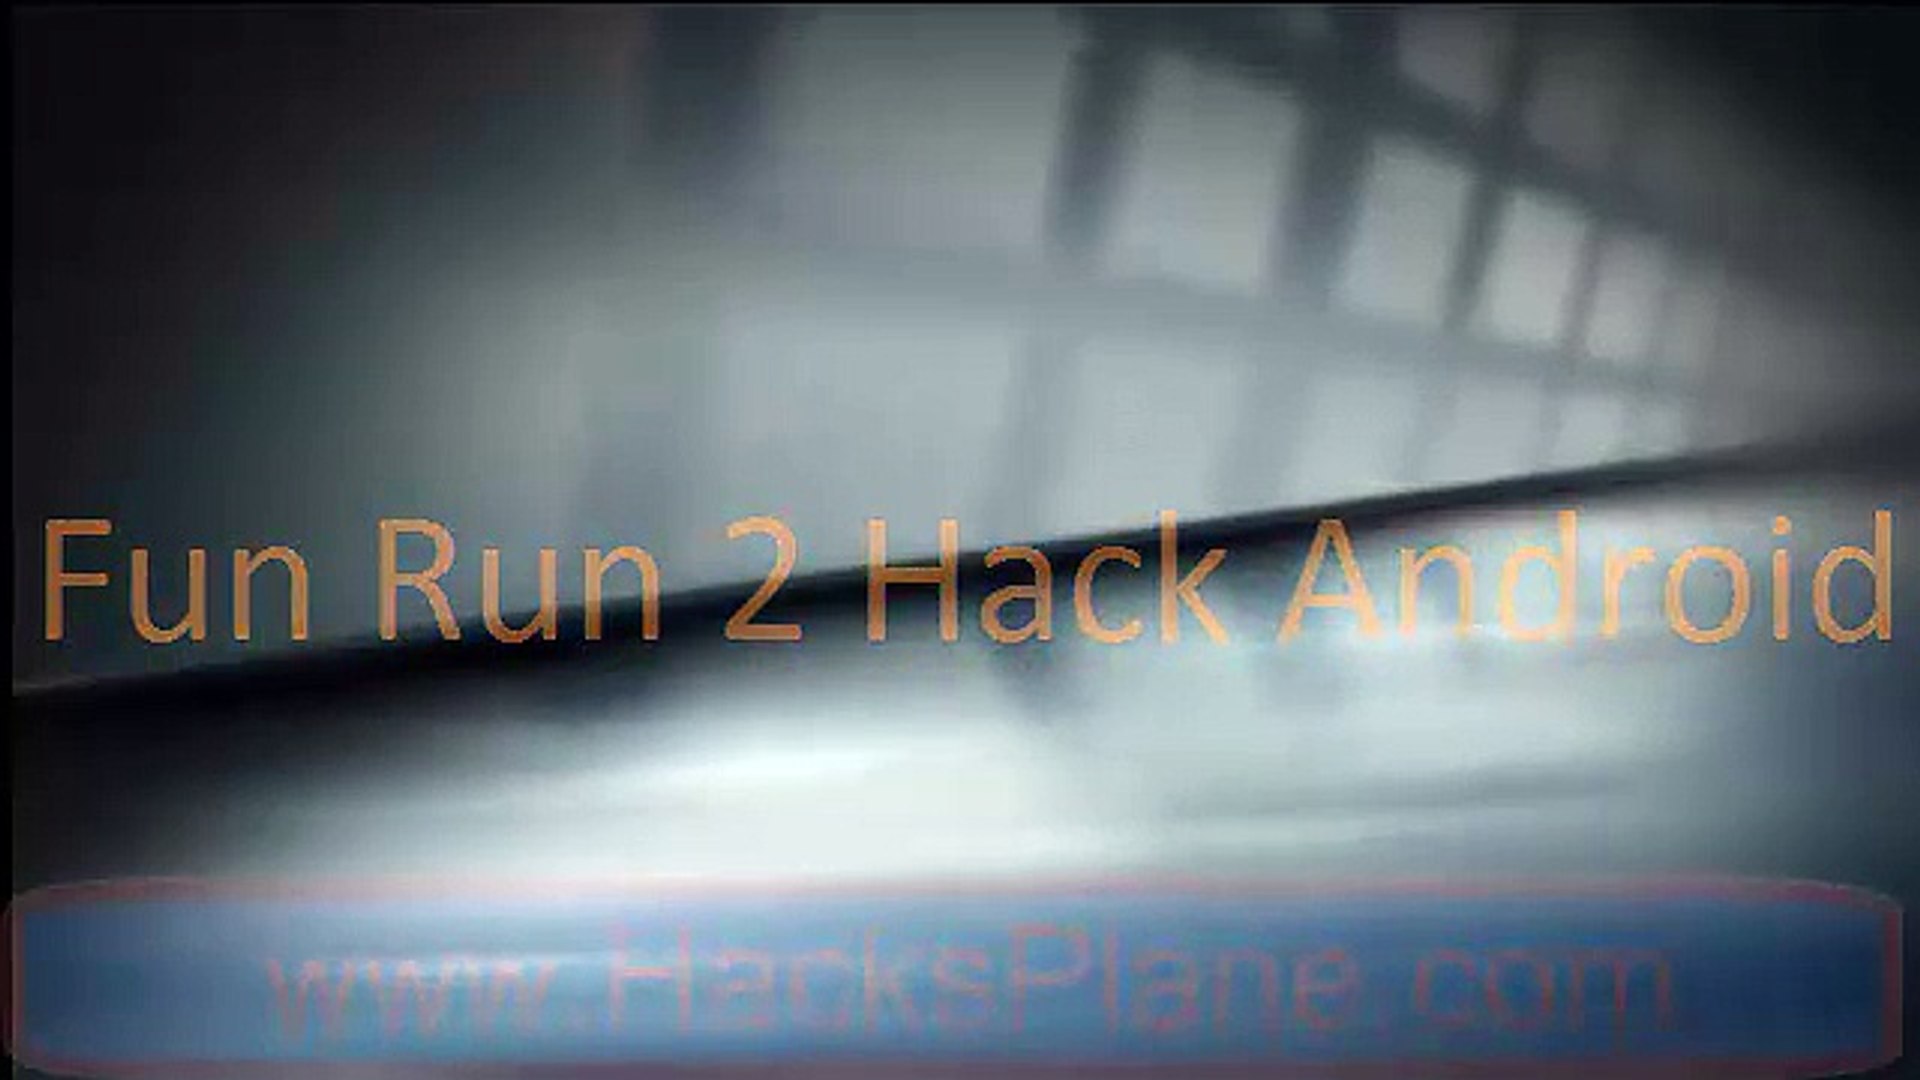 Fun Run 2 Hack Android Apk Download Video Dailymotion